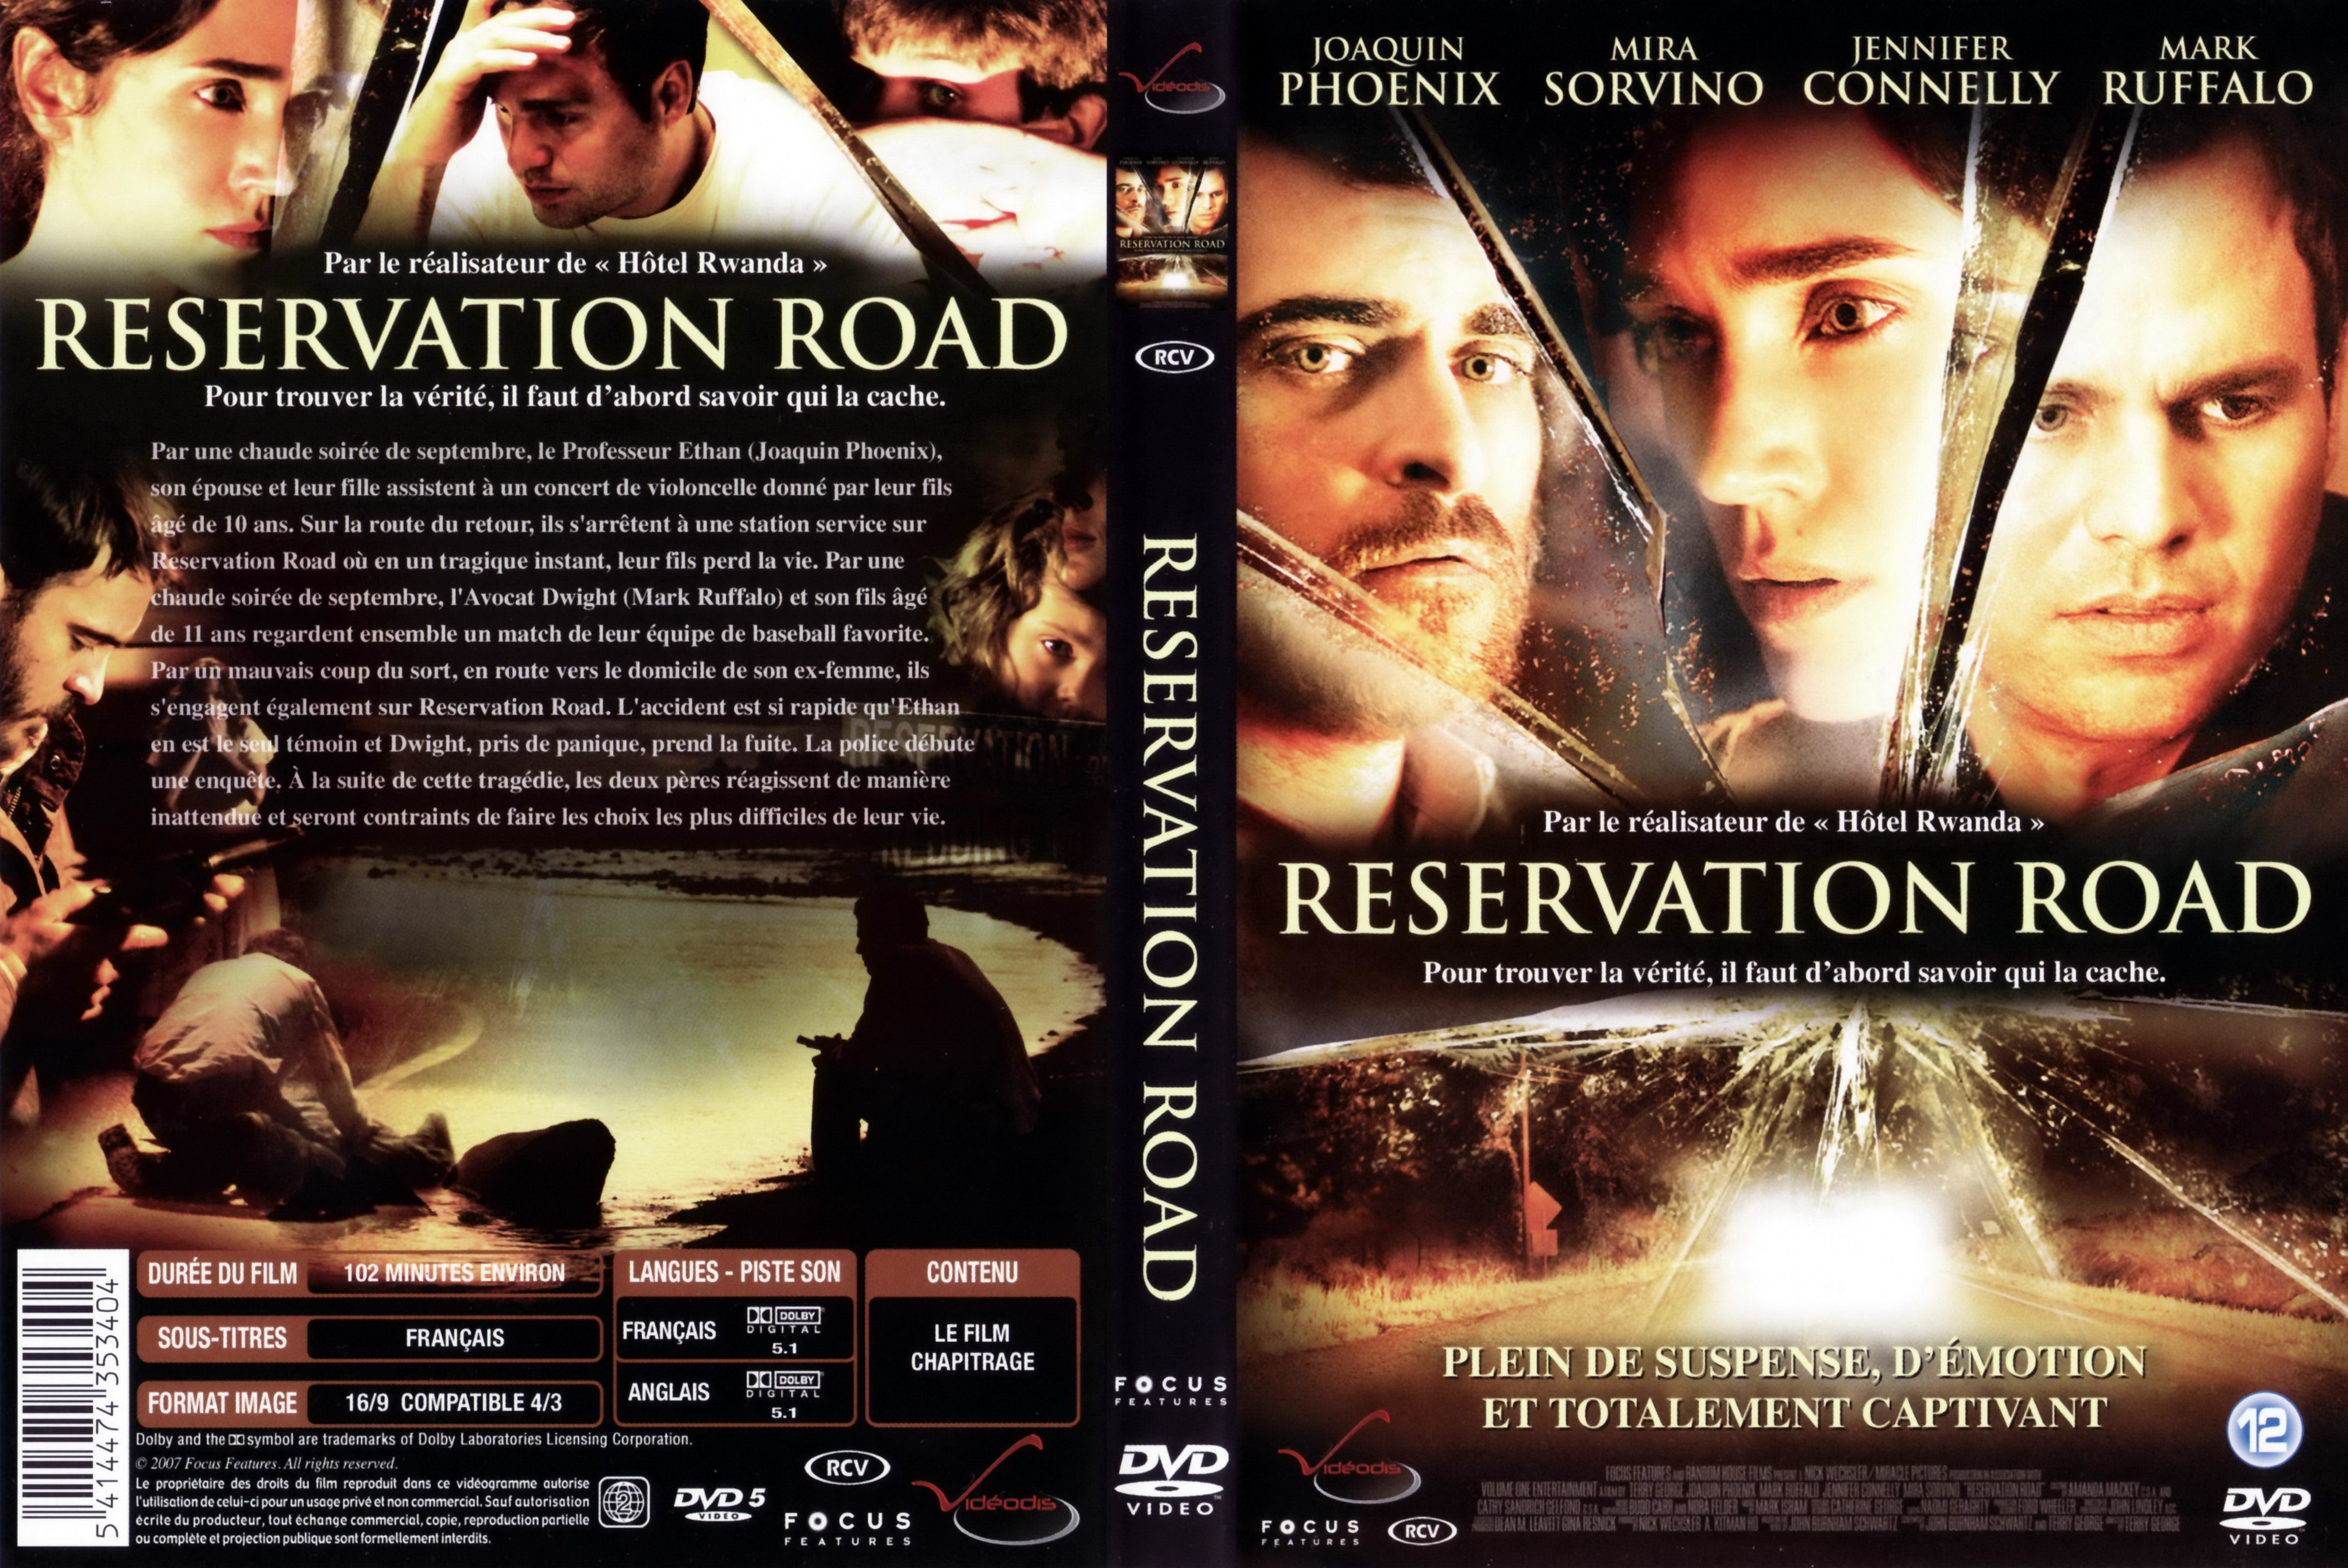 Jaquette DVD Reservation road